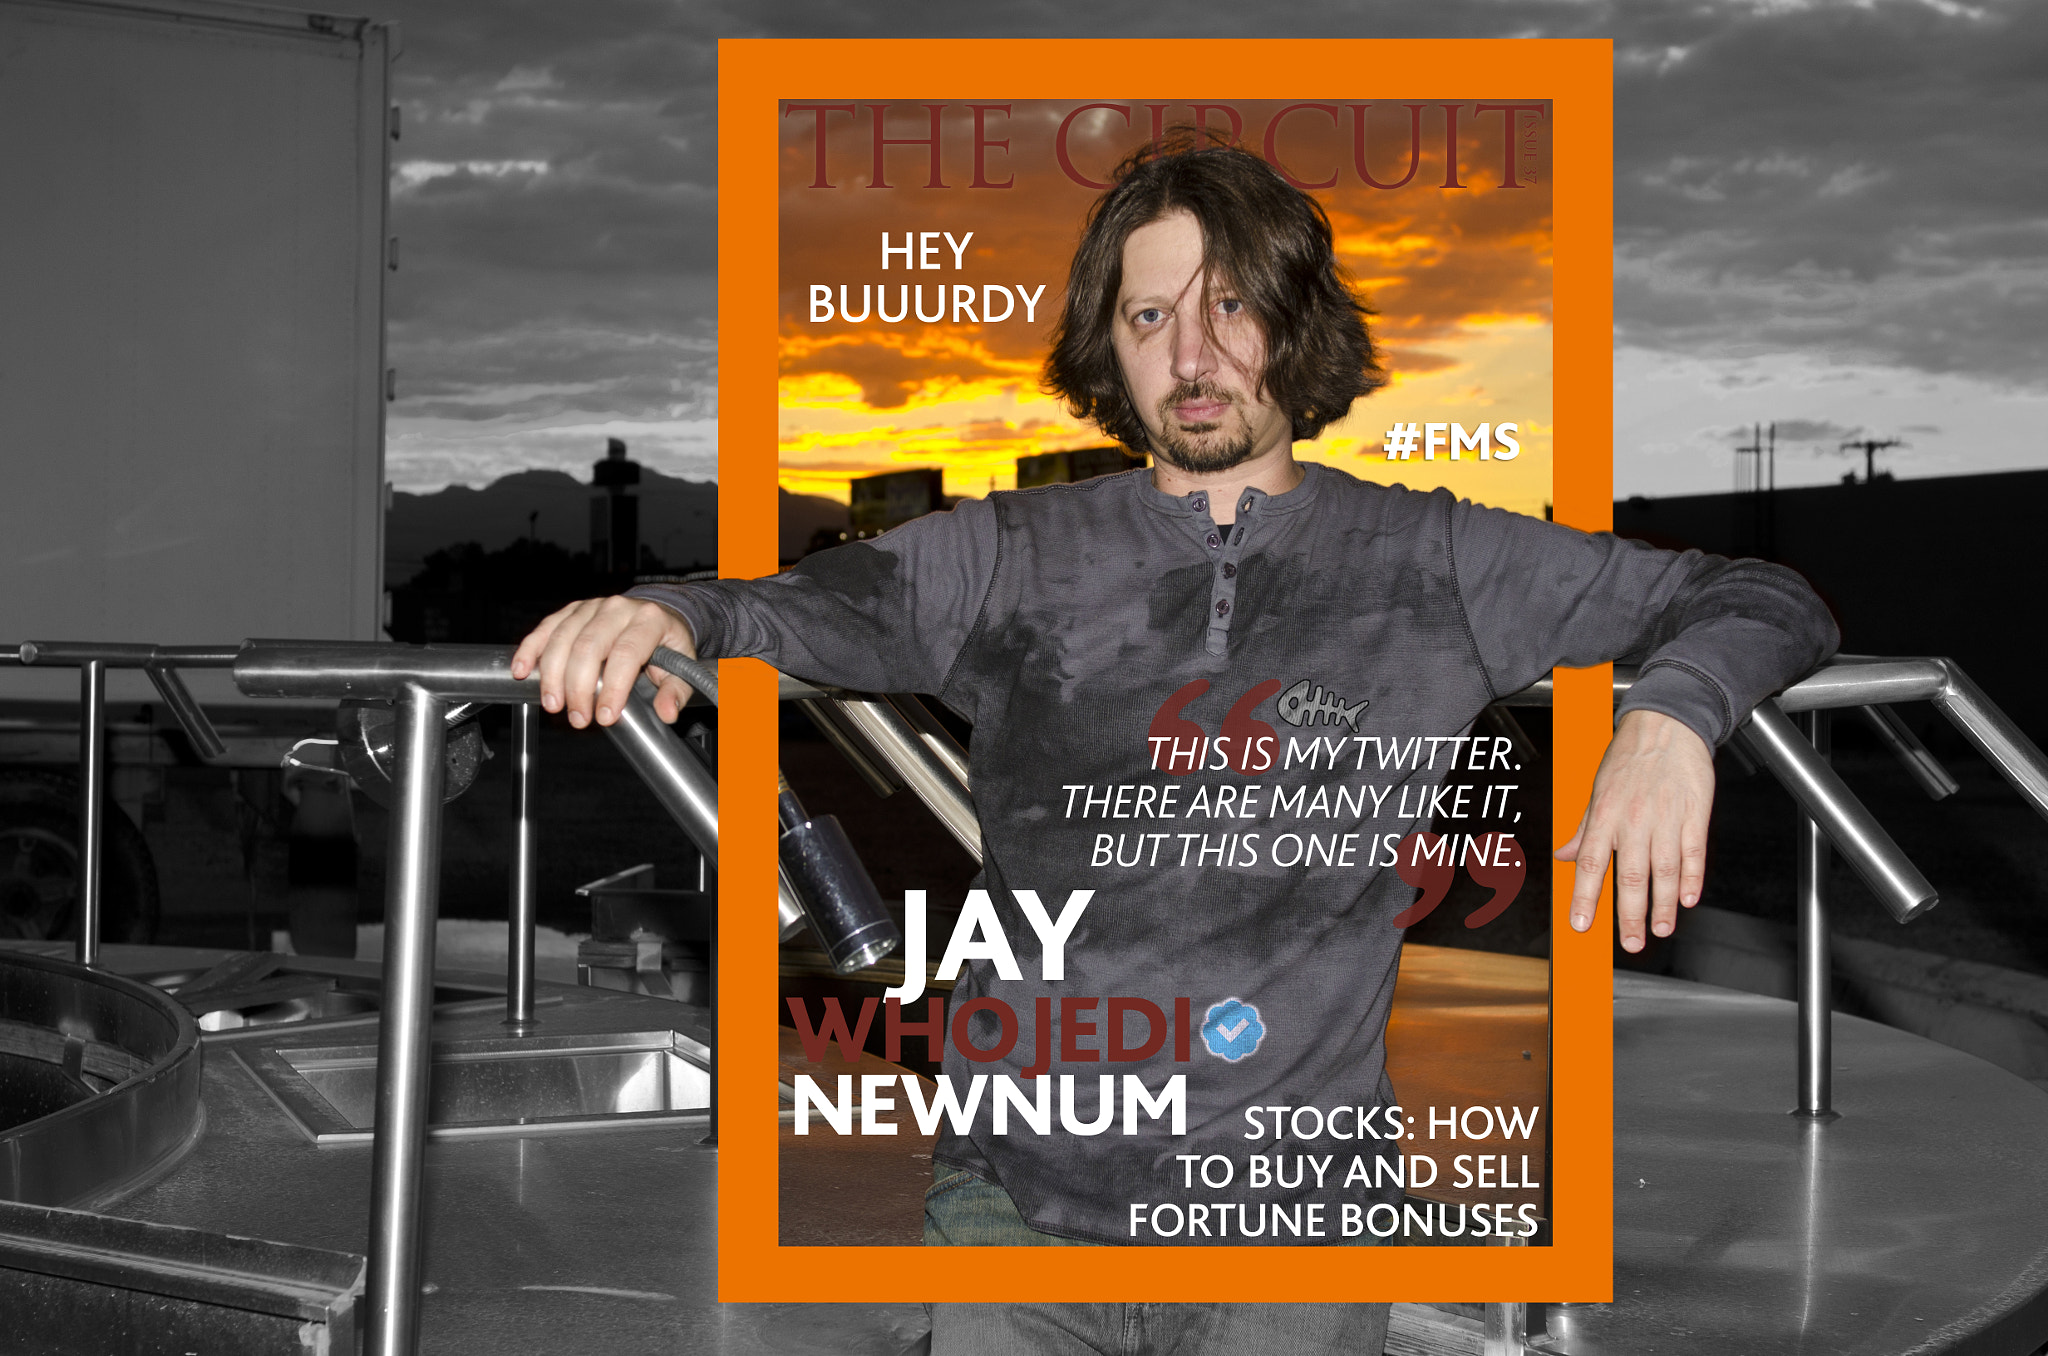 Issue 37 - Jay Newnum